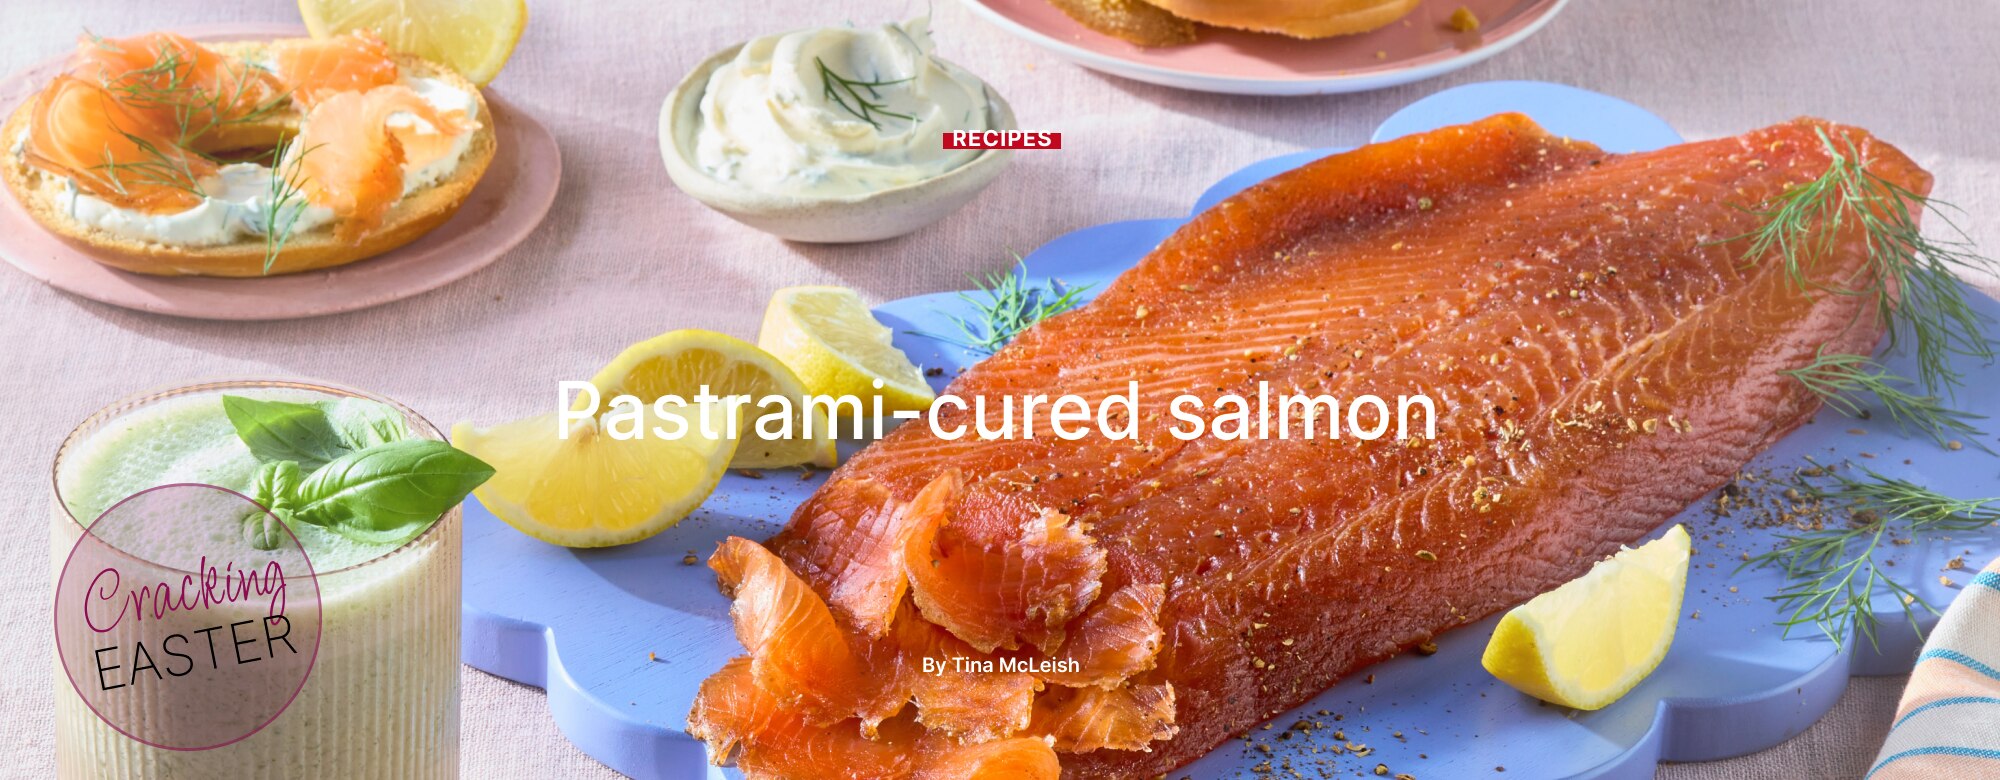 Pastrami-cured salmon